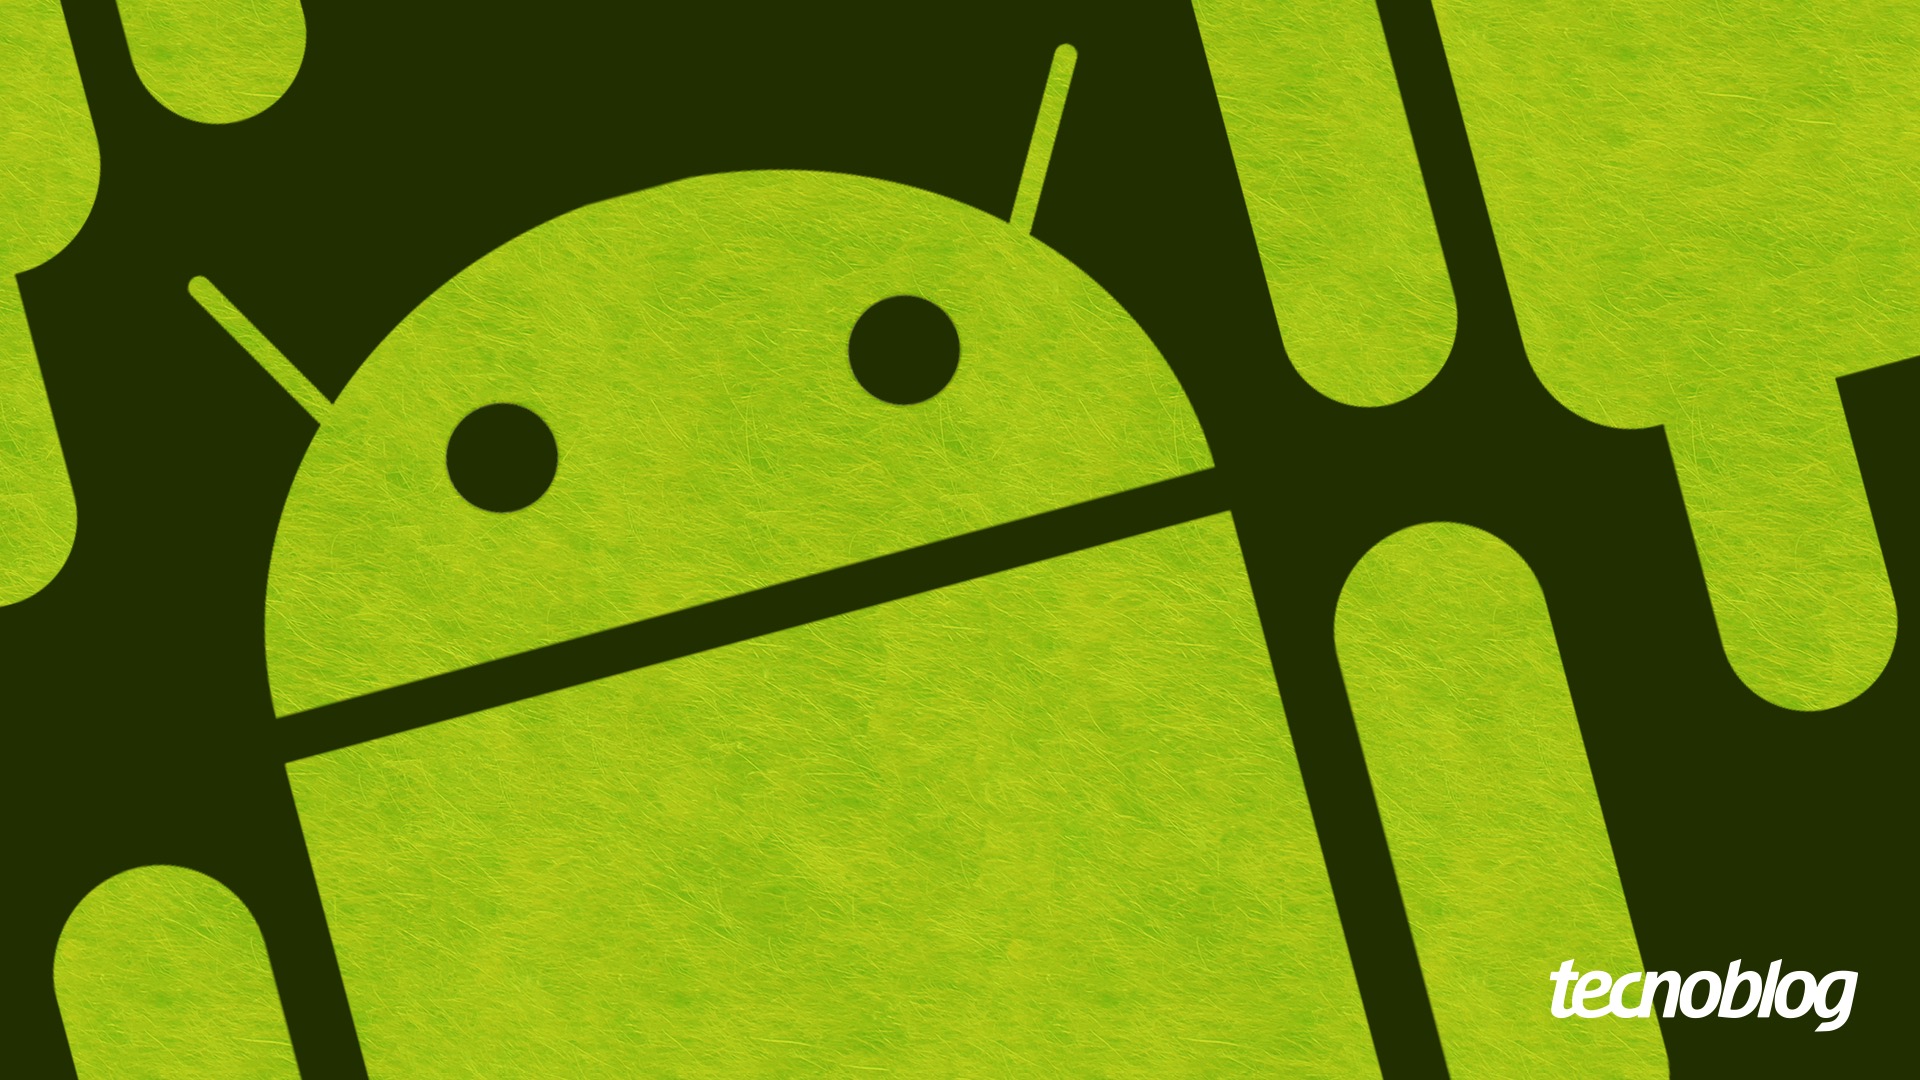 Android 13: Google prepara recurso que carrega jogos mais rápido